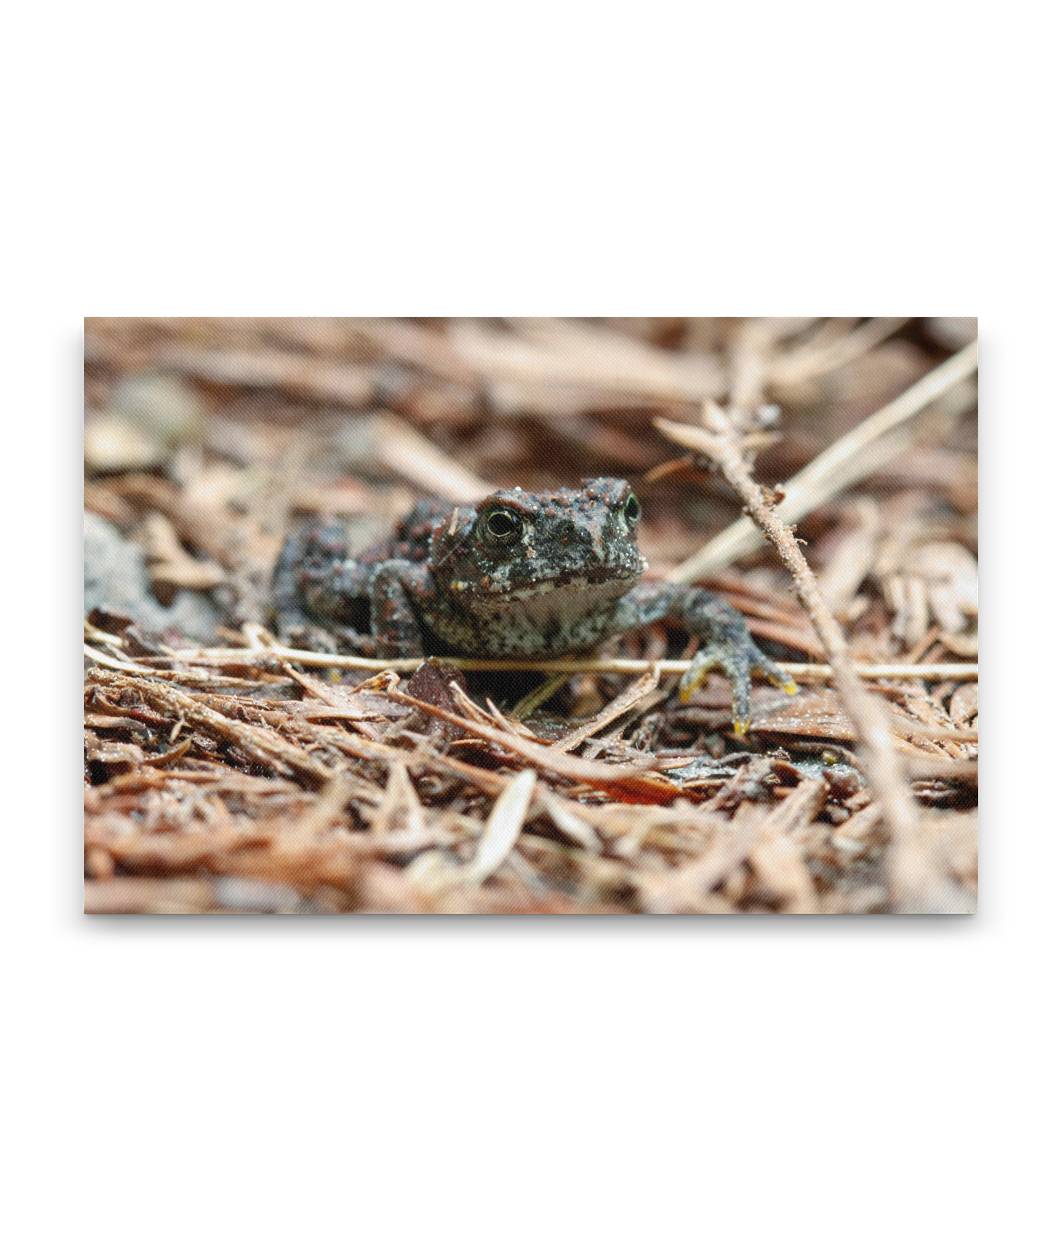 Boreal Toad, Prairie Creek Redwoods State Park, California, USA